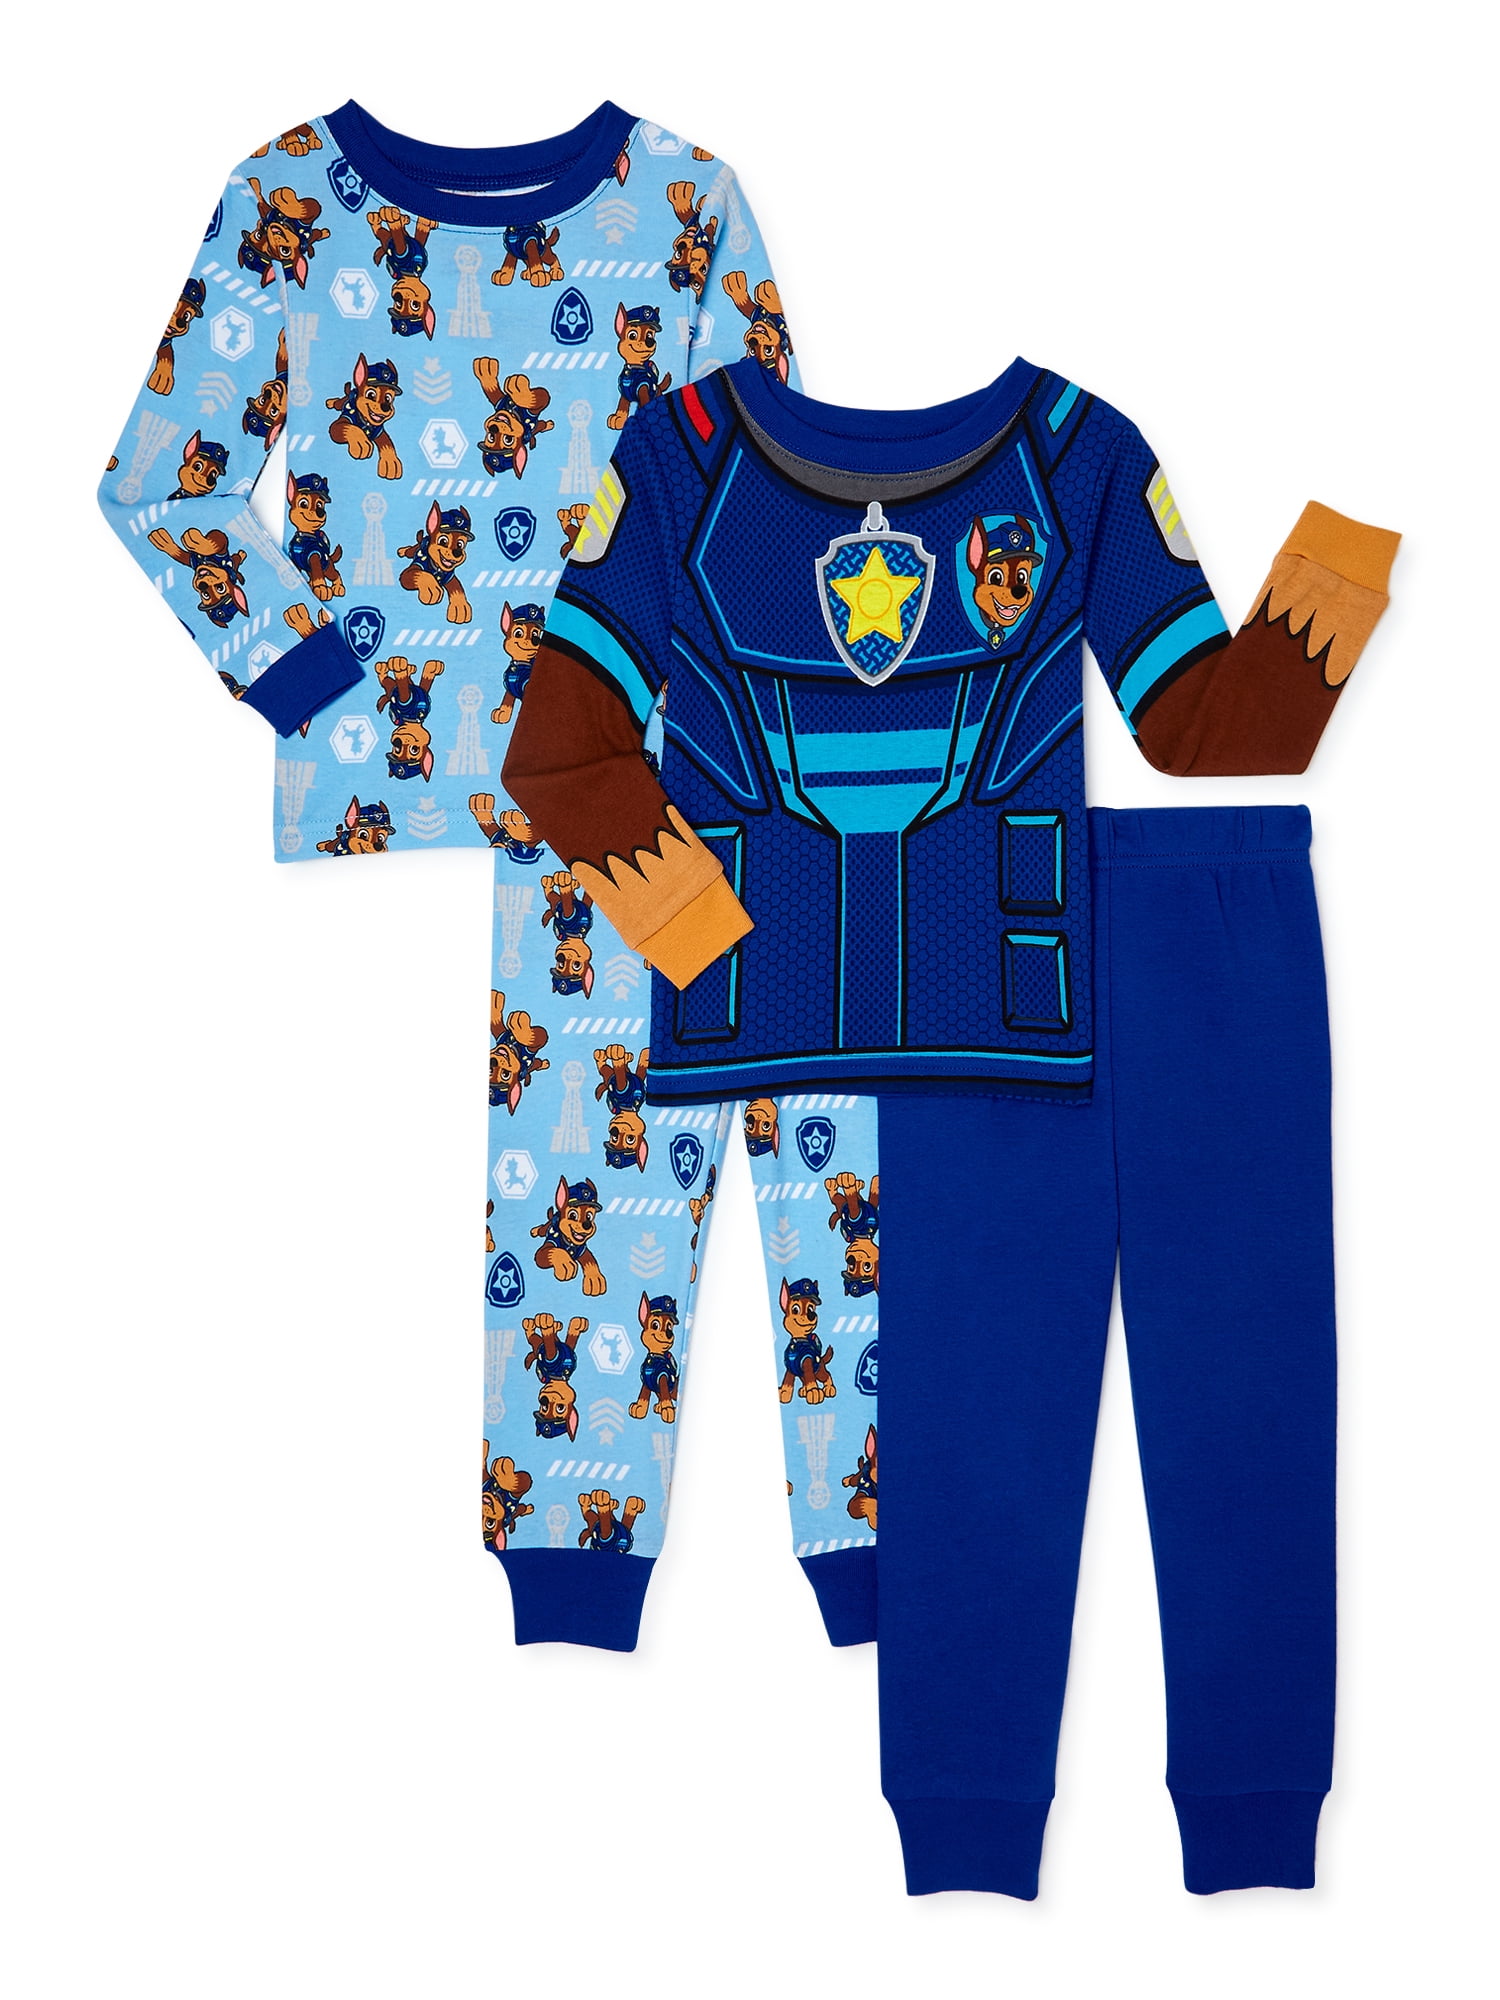 Size 3T USA Seller Blippi Official Pajama Sleepwear Set 